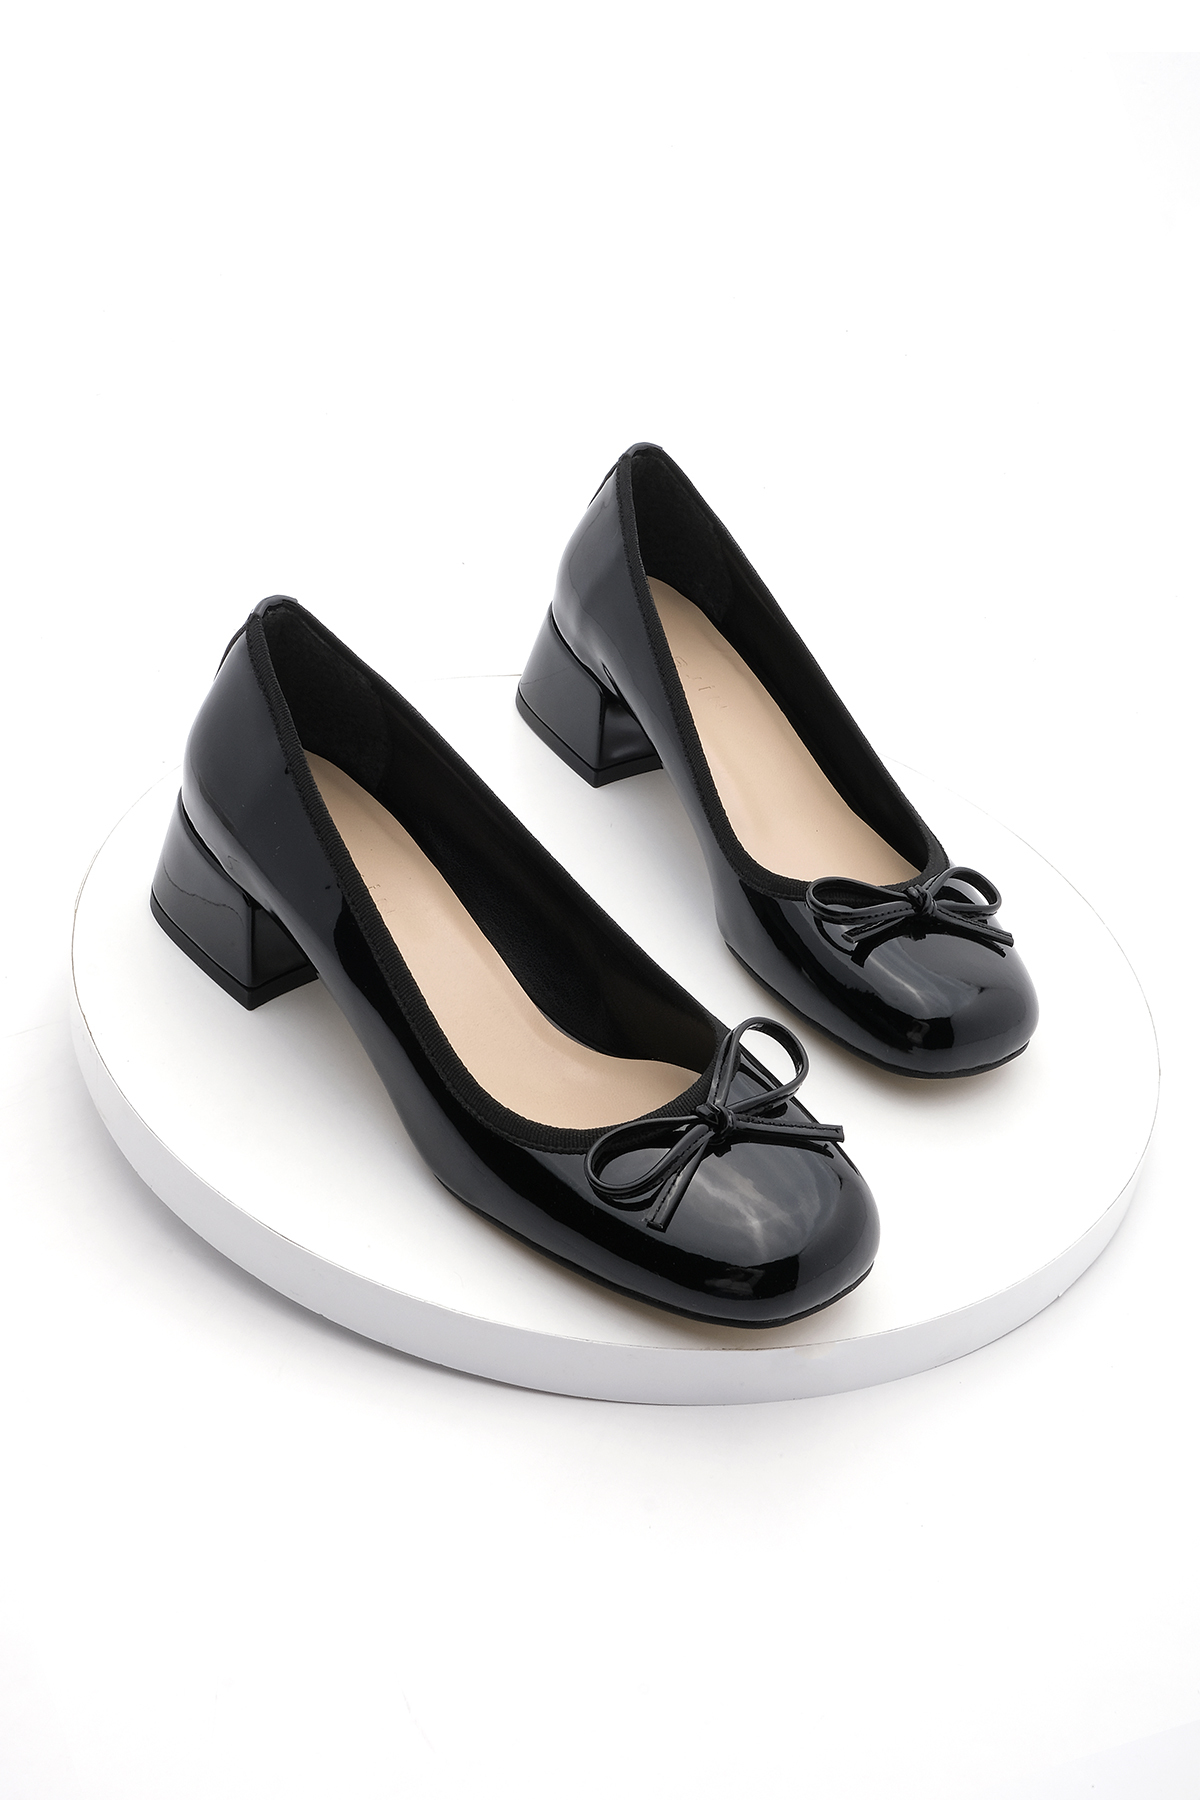 Levně Marjin Women's Chunky Heel Bow Detail Flat Toe Classic Heeled Shoes Medve Black Patent Leather